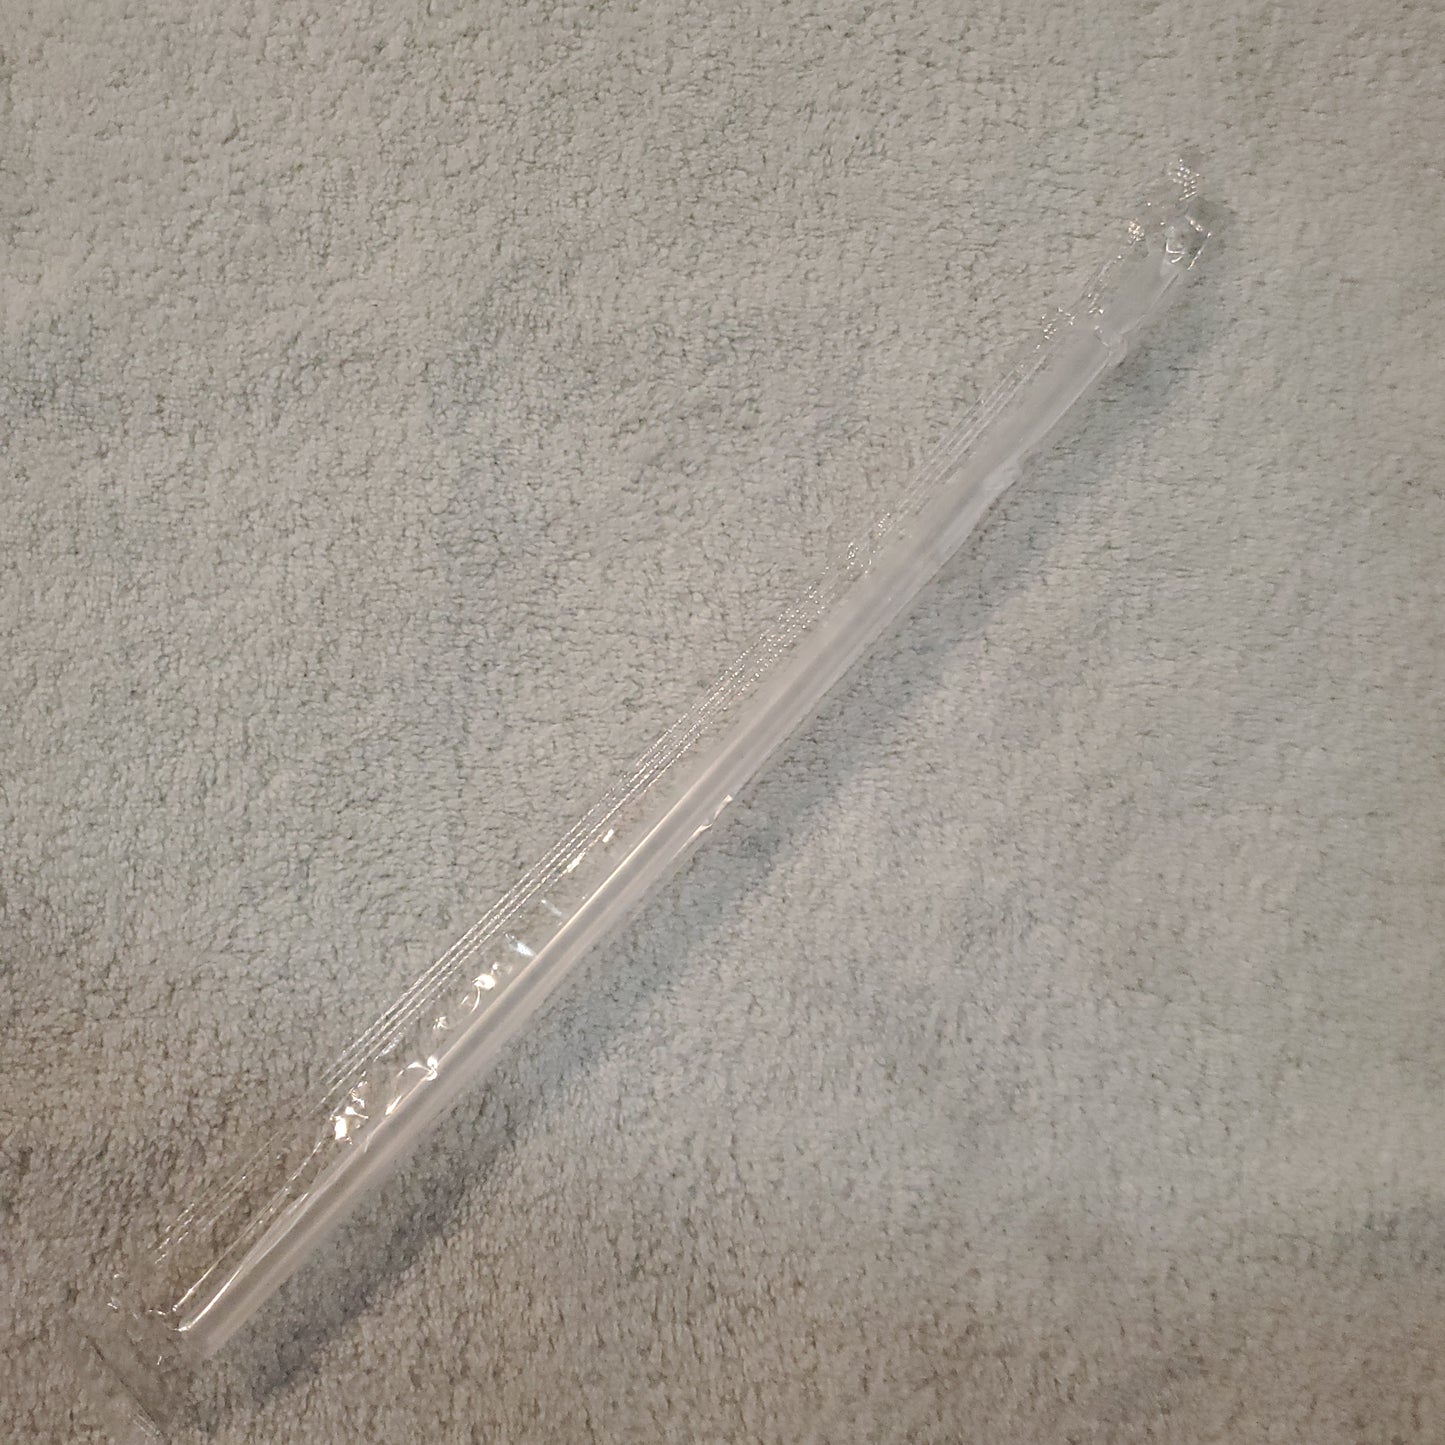 20oz Plastic Straw